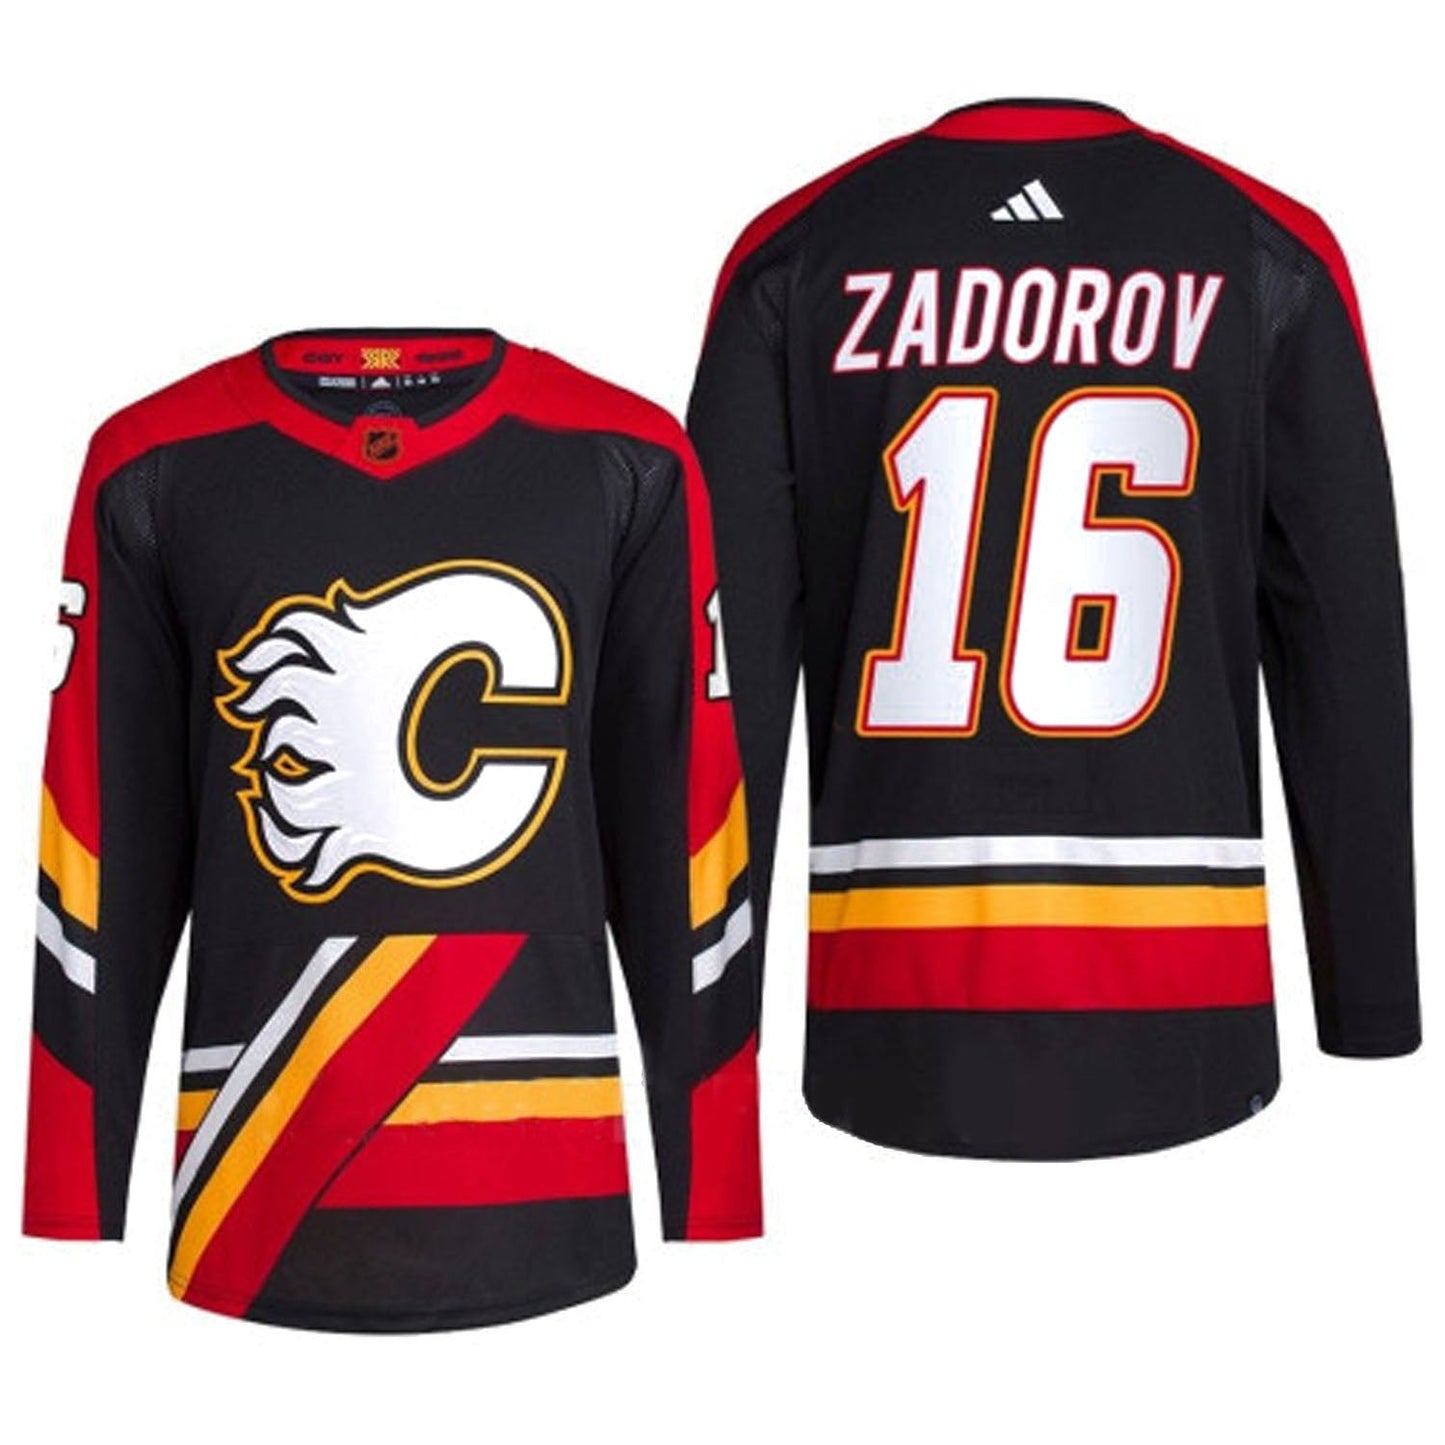 NHL Nikita Zadorov Calgary Flames 16 Jersey